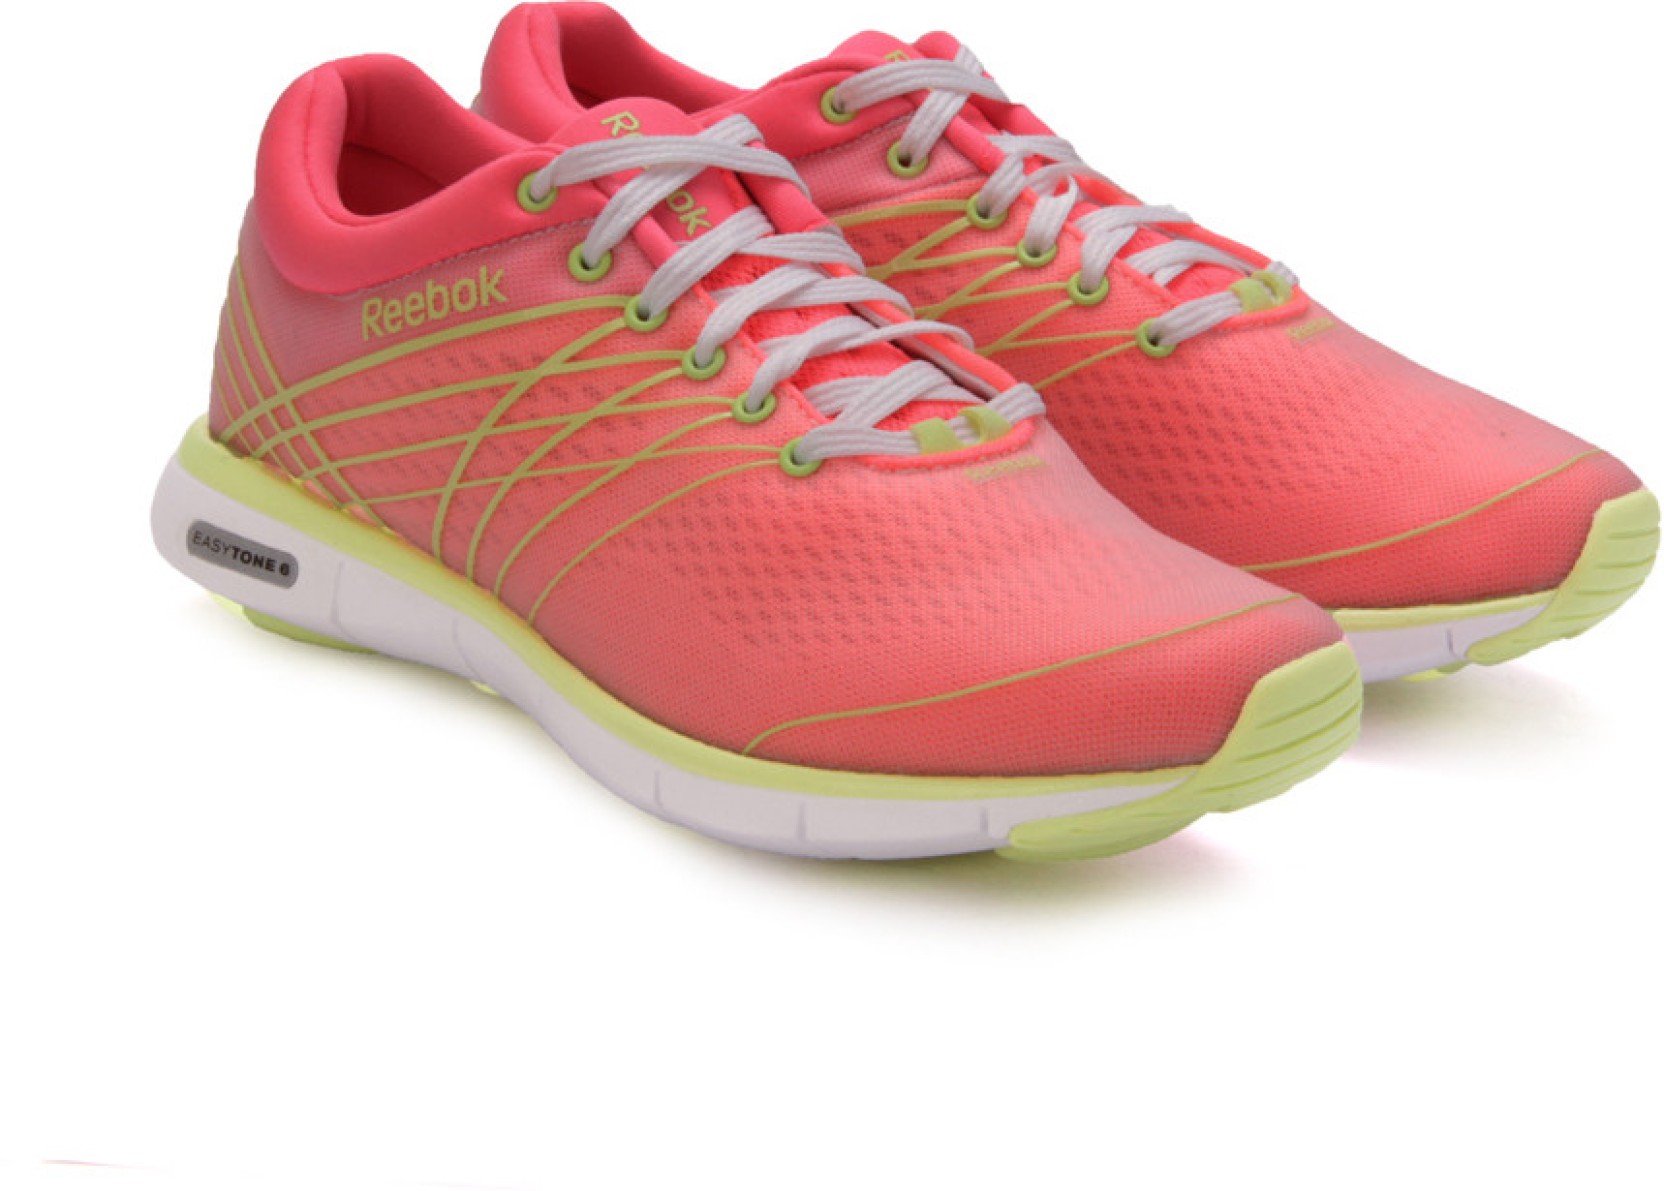  Reebok  Easytone 6 Fly Running Shoes  Buy Pink Lemon 